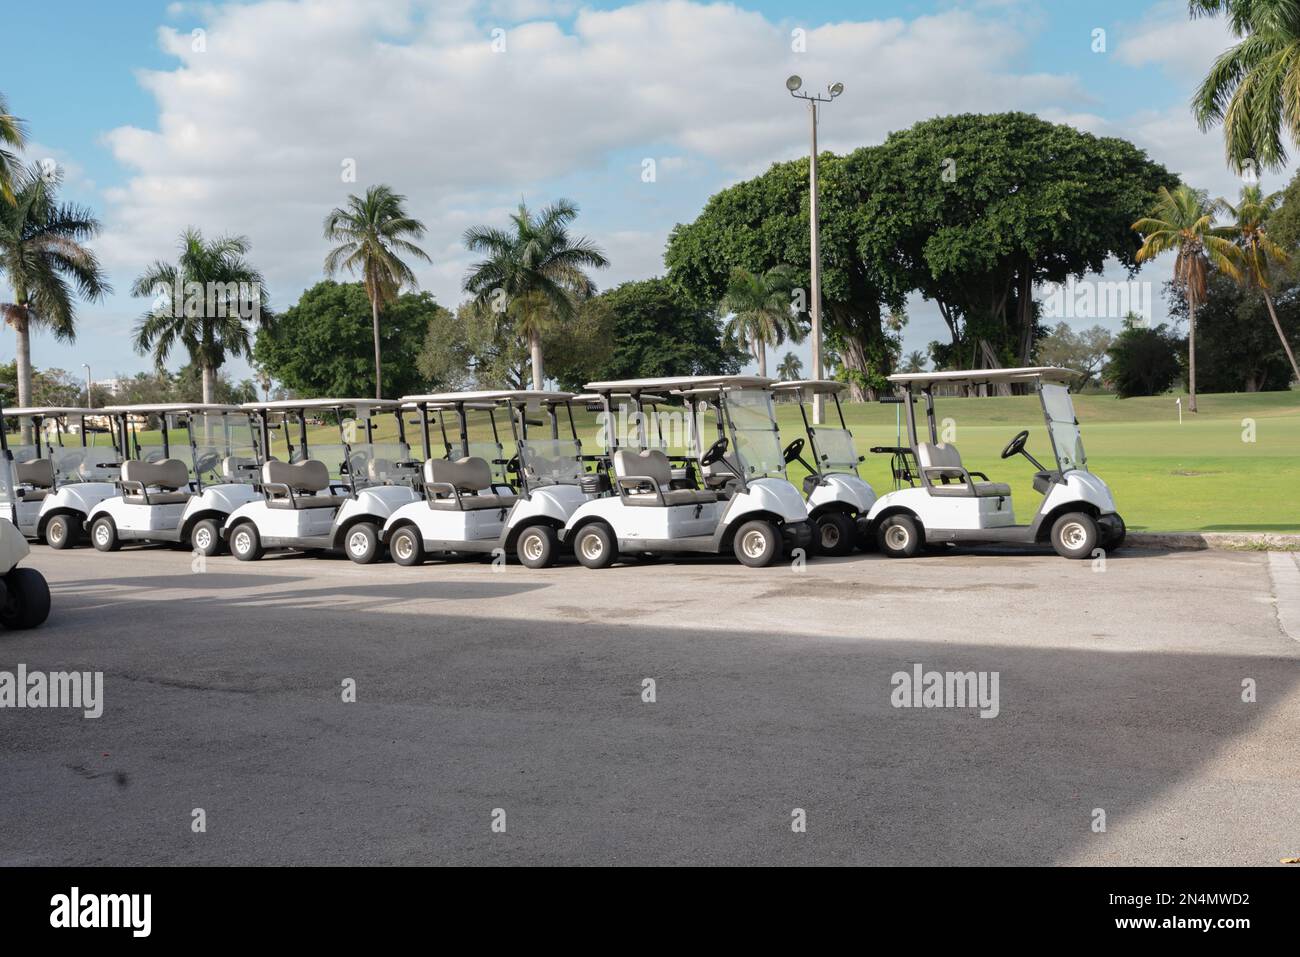 Golf cart presso un golf coures Foto Stock